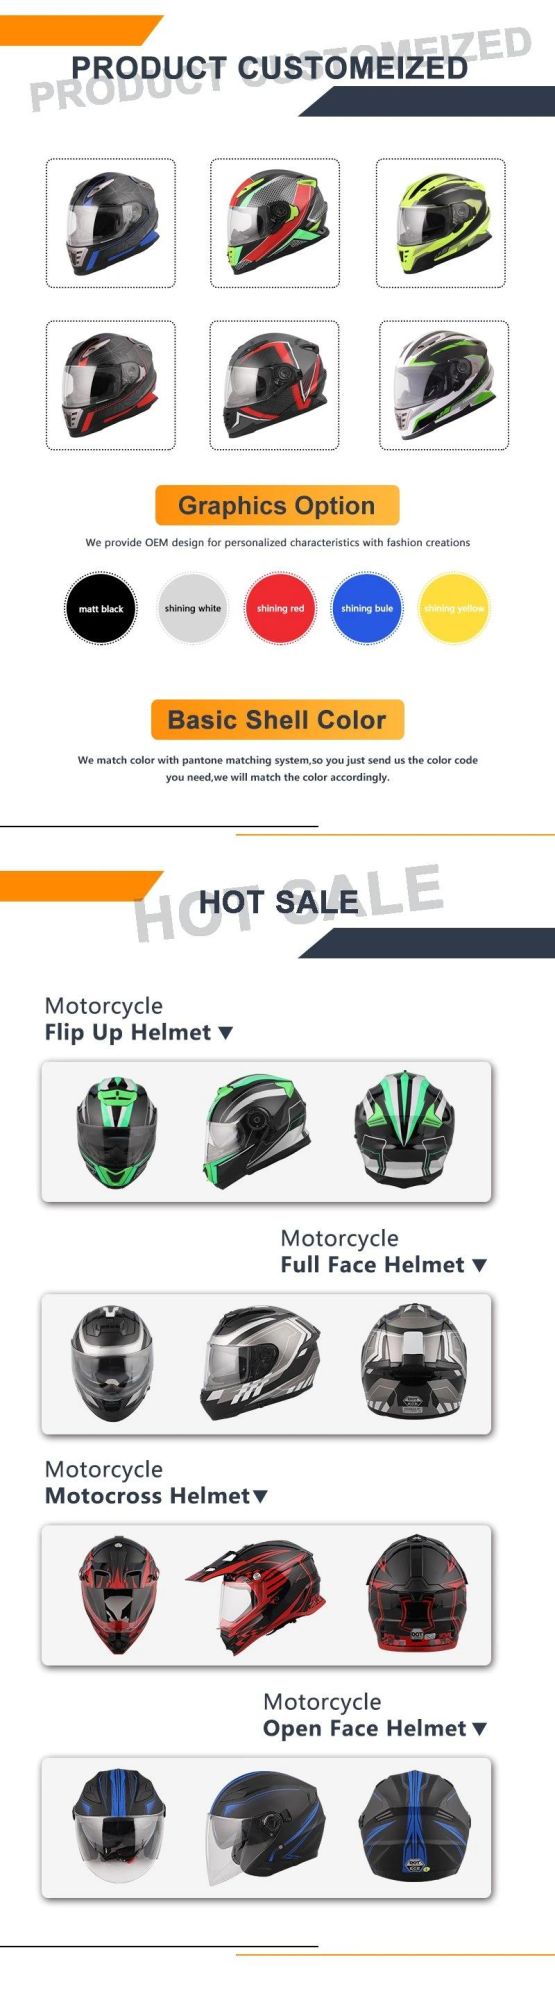 Motorcycle Equipment Safe Full Face Helmet with Double Visors Helmets for Sale